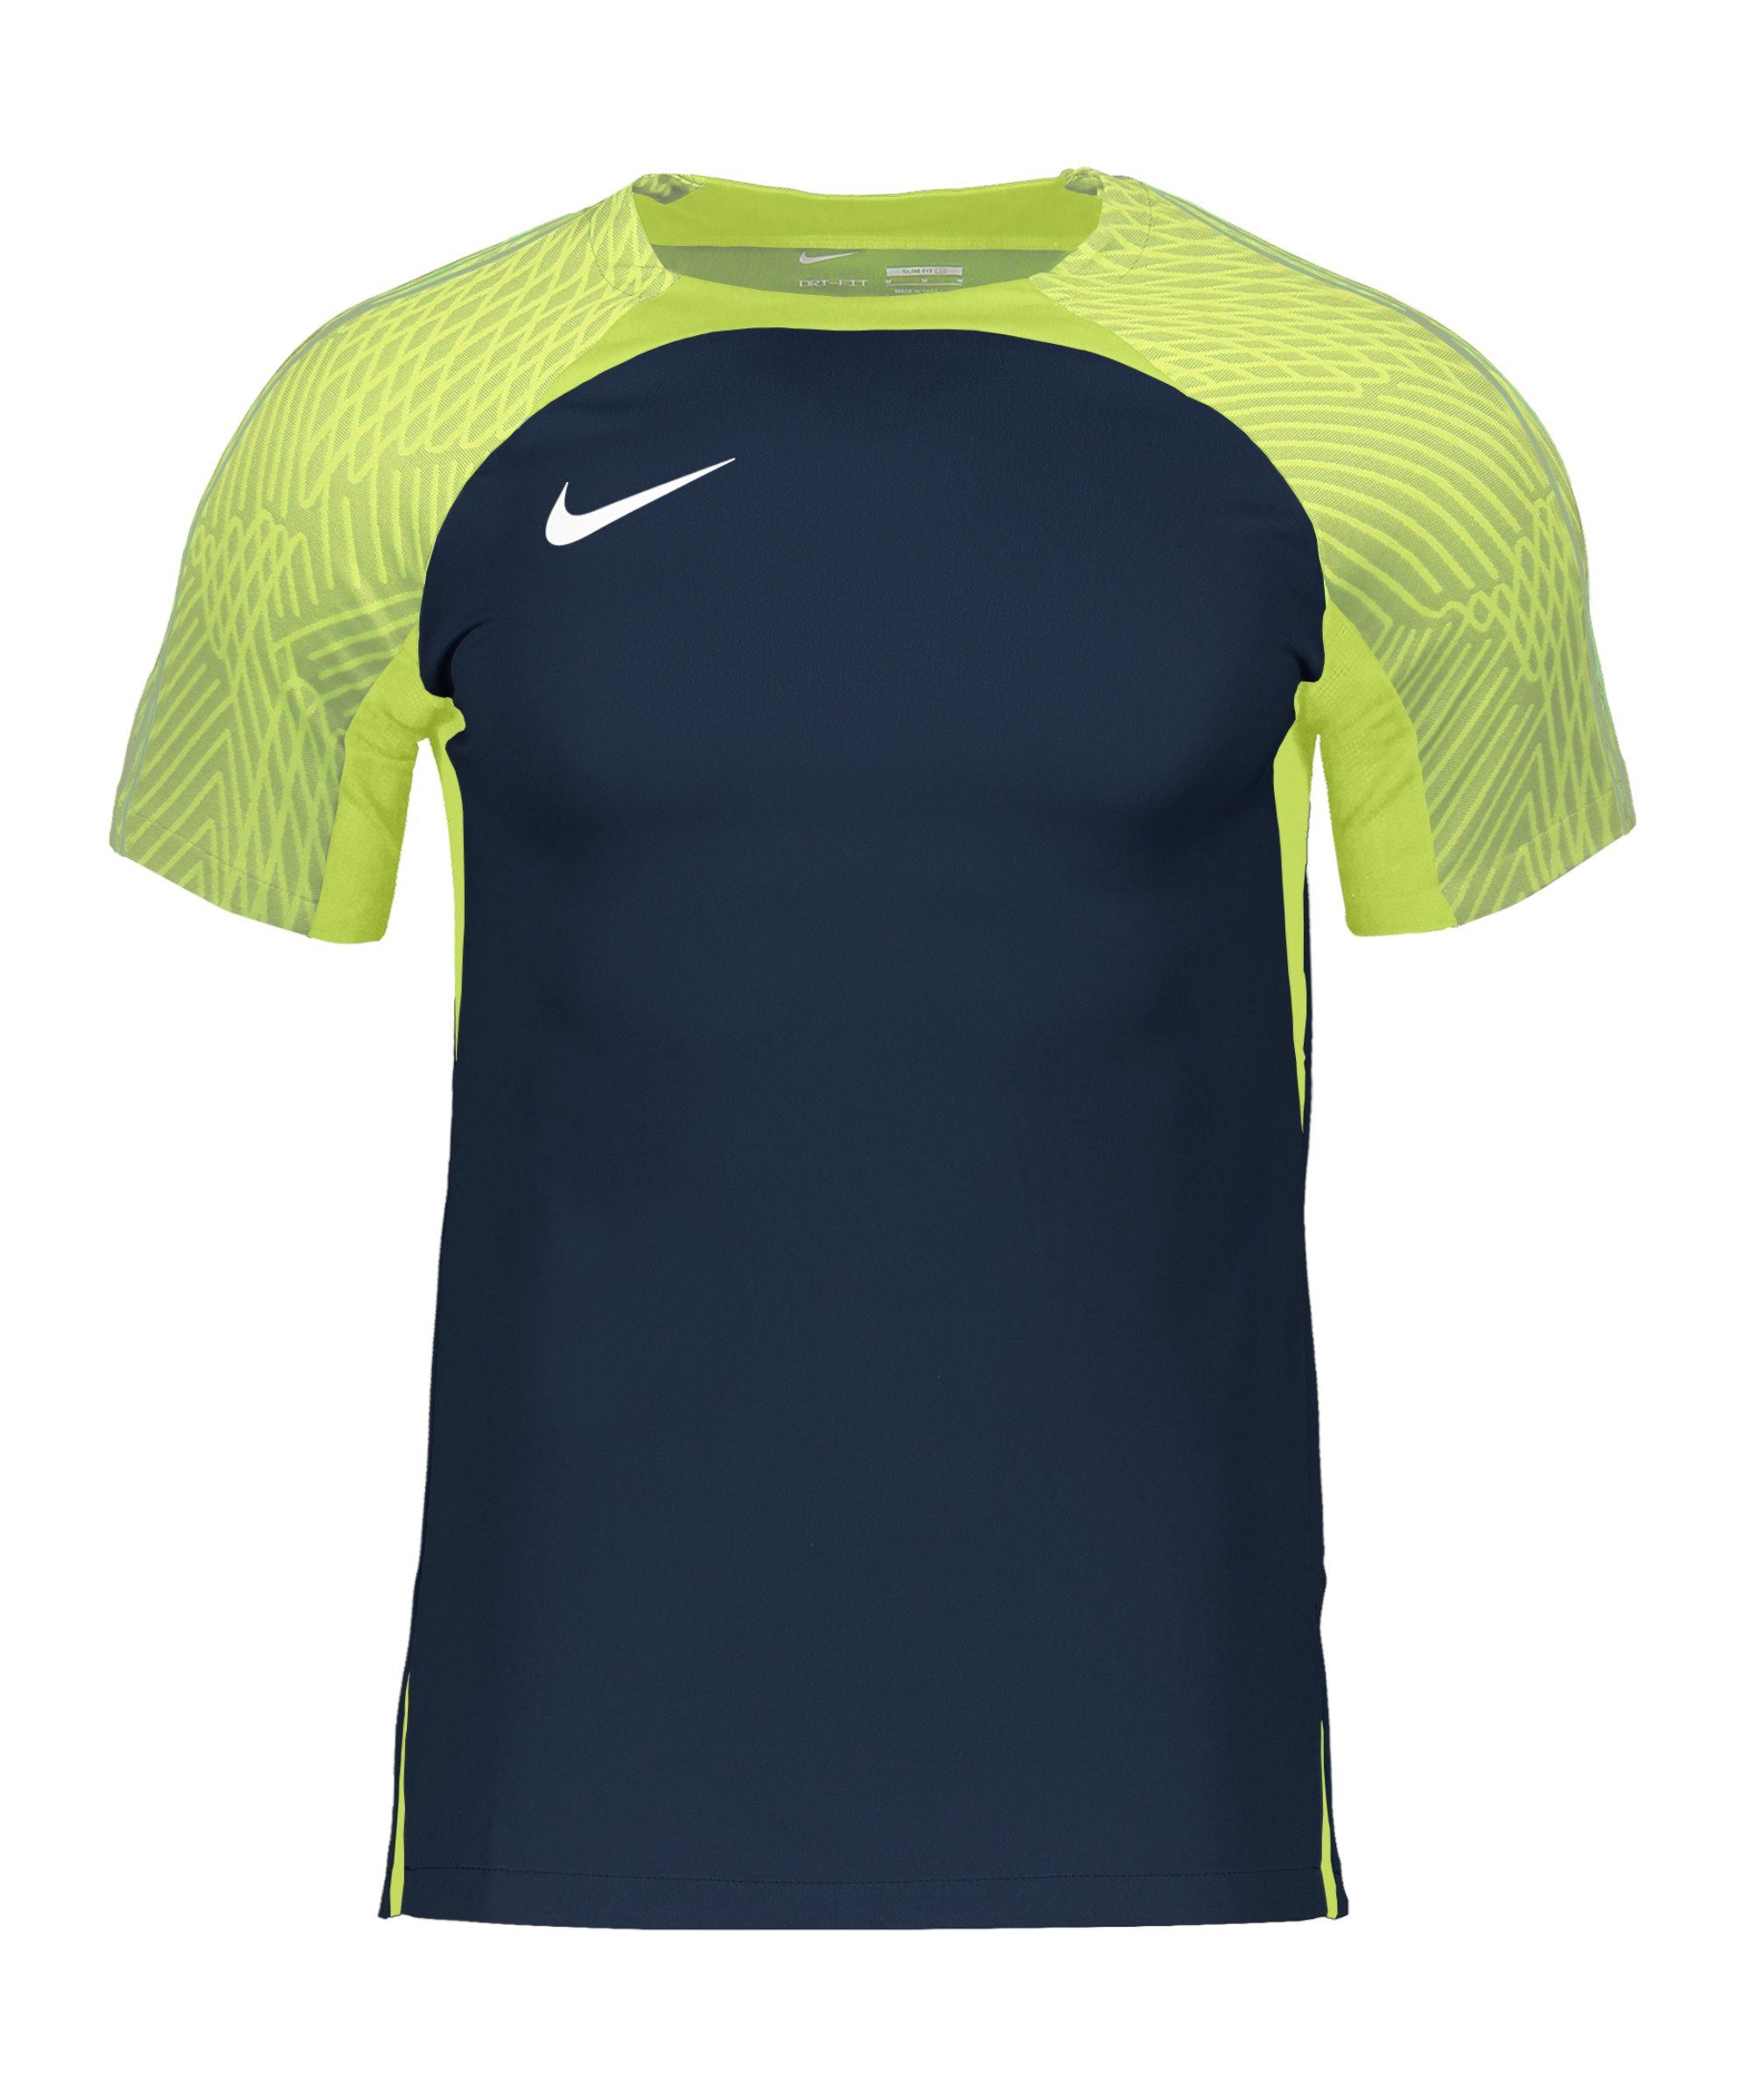 Trainingsshirt 23 Nike default T-Shirt Strike blaugrauweiss